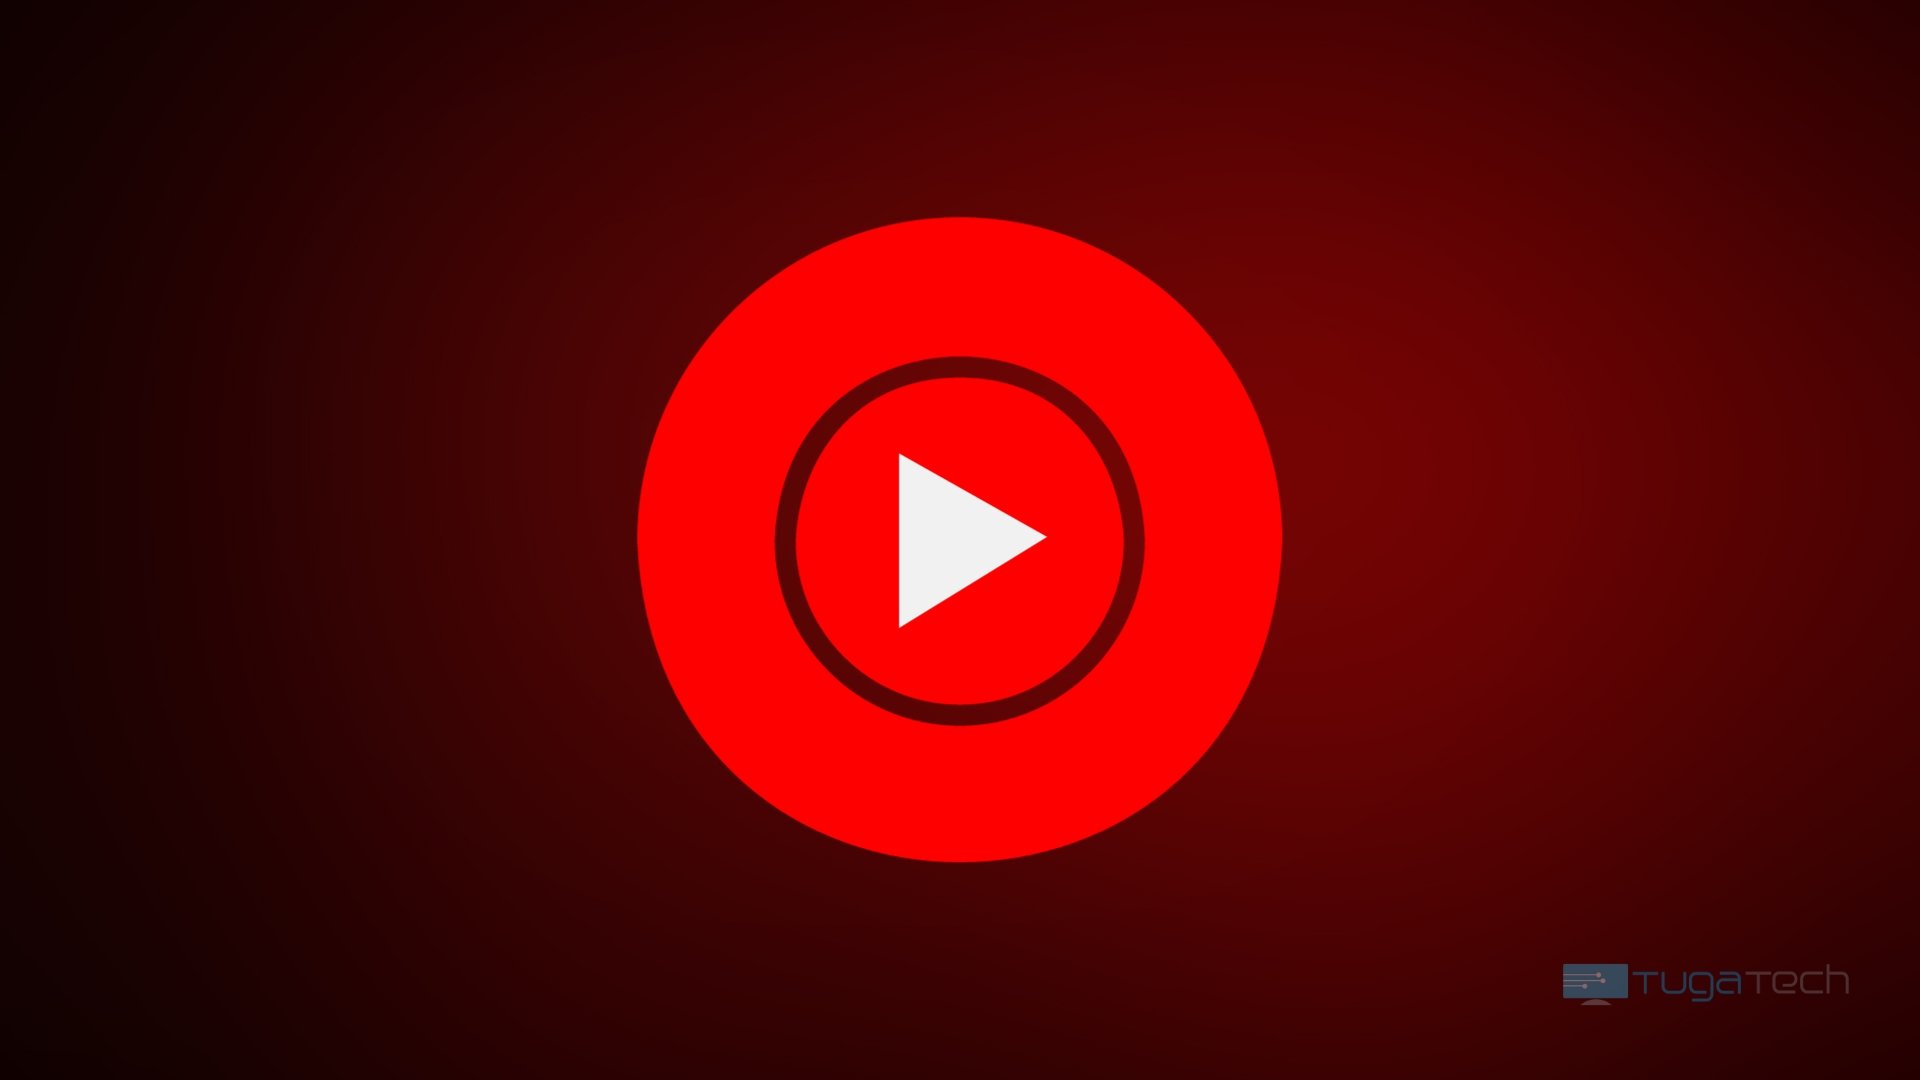 Youtube Music logo